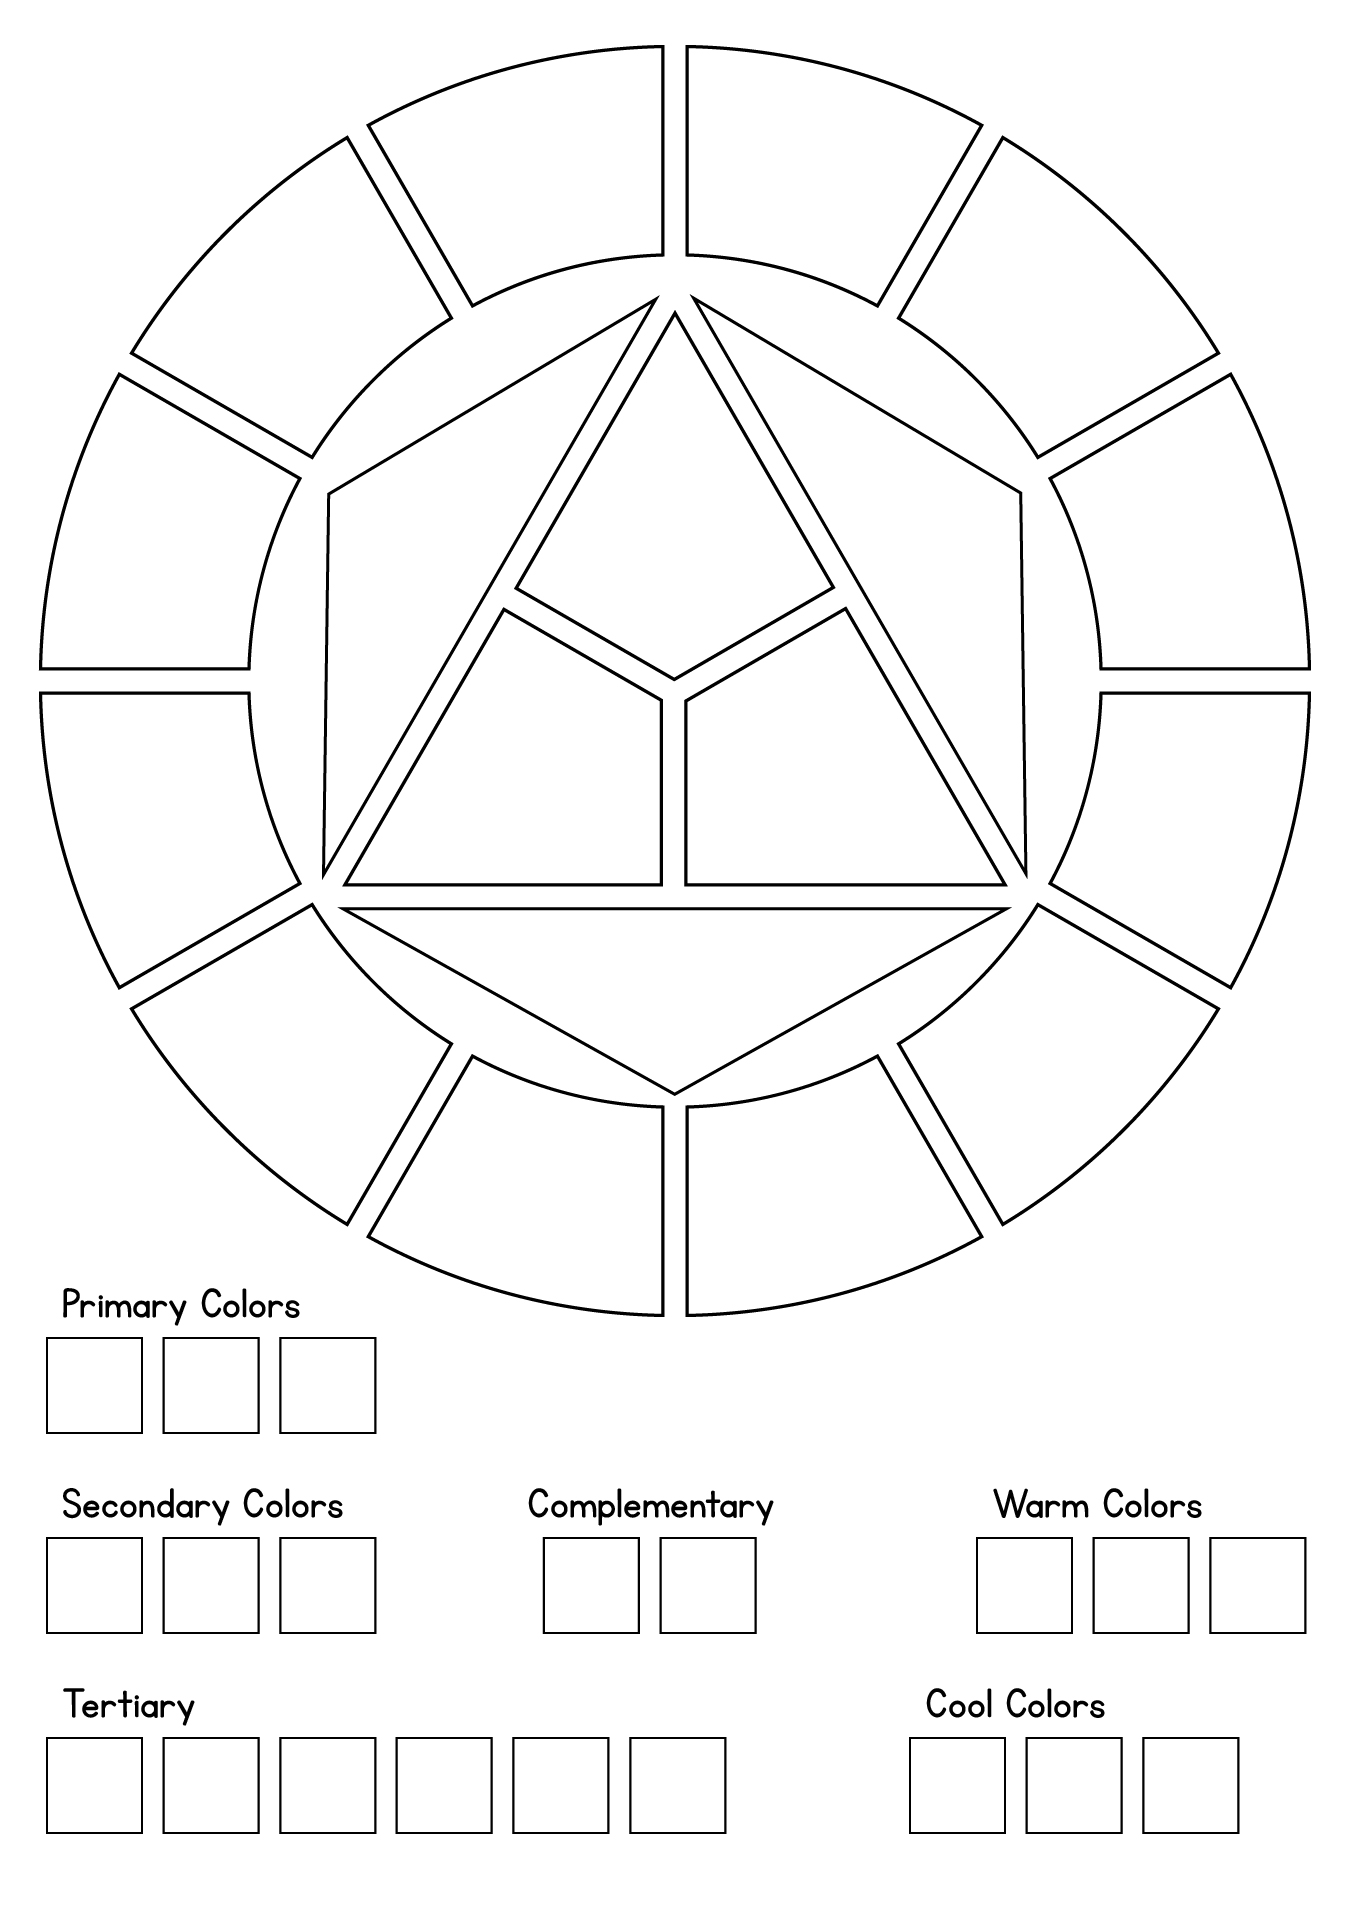 Basic Color Theory Wheel Worksheet